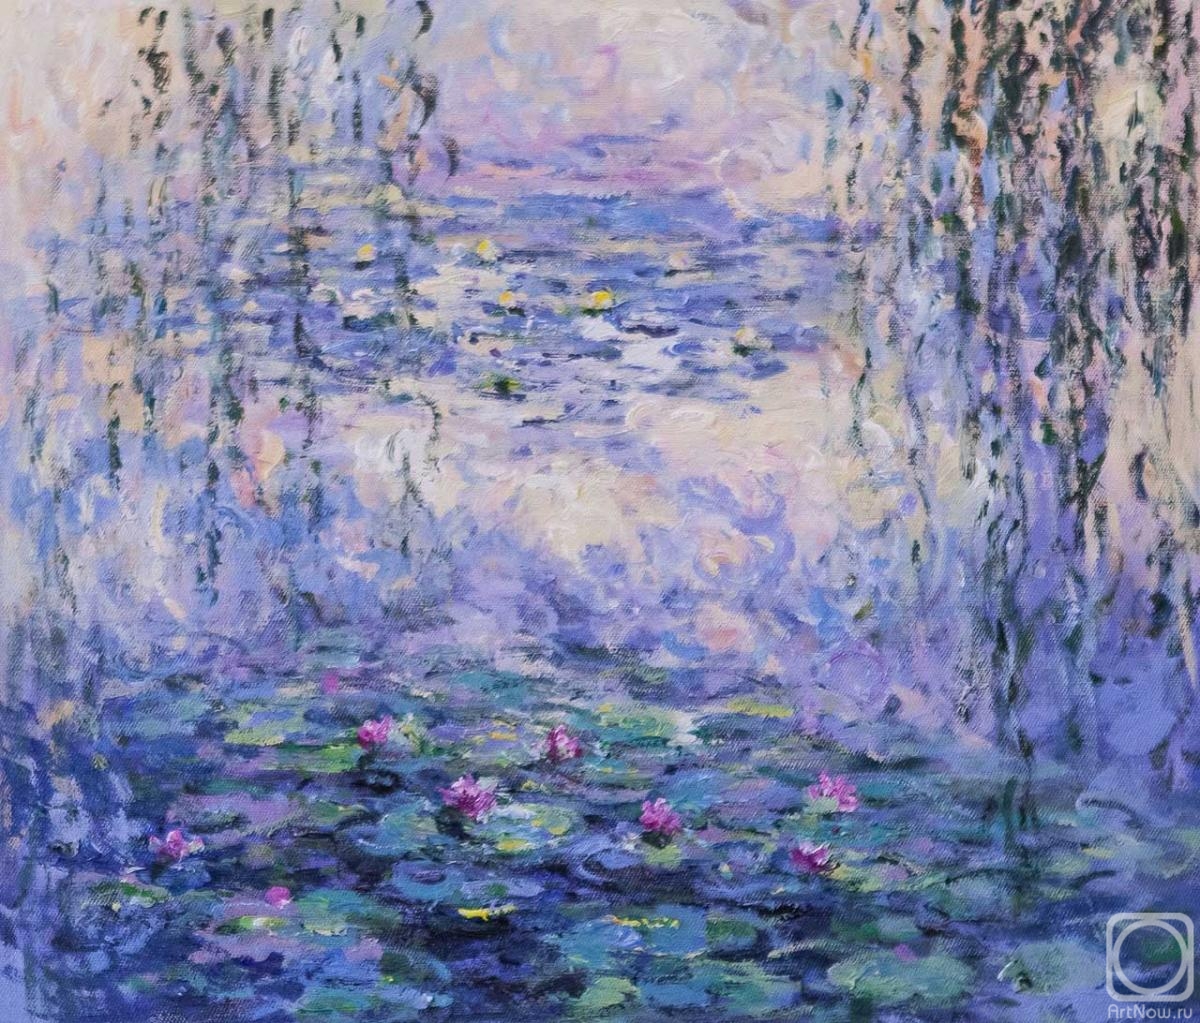 Kamskij Savelij. Water lilies, N27, copy of Claude Monet's picture